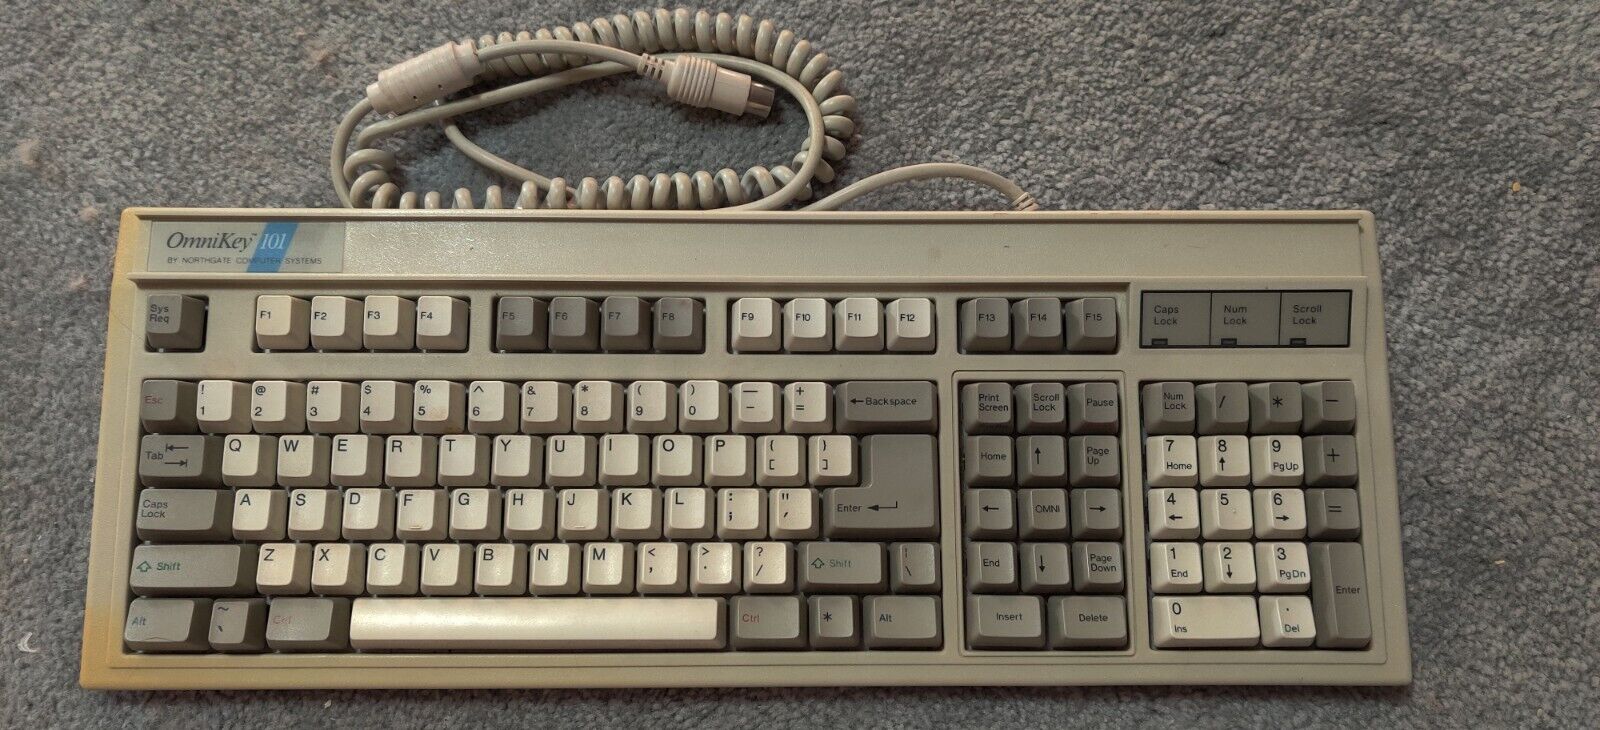 Northgate OmniKey 101 N GT60MNIKEY101 Vintage Mechanical Keyboard